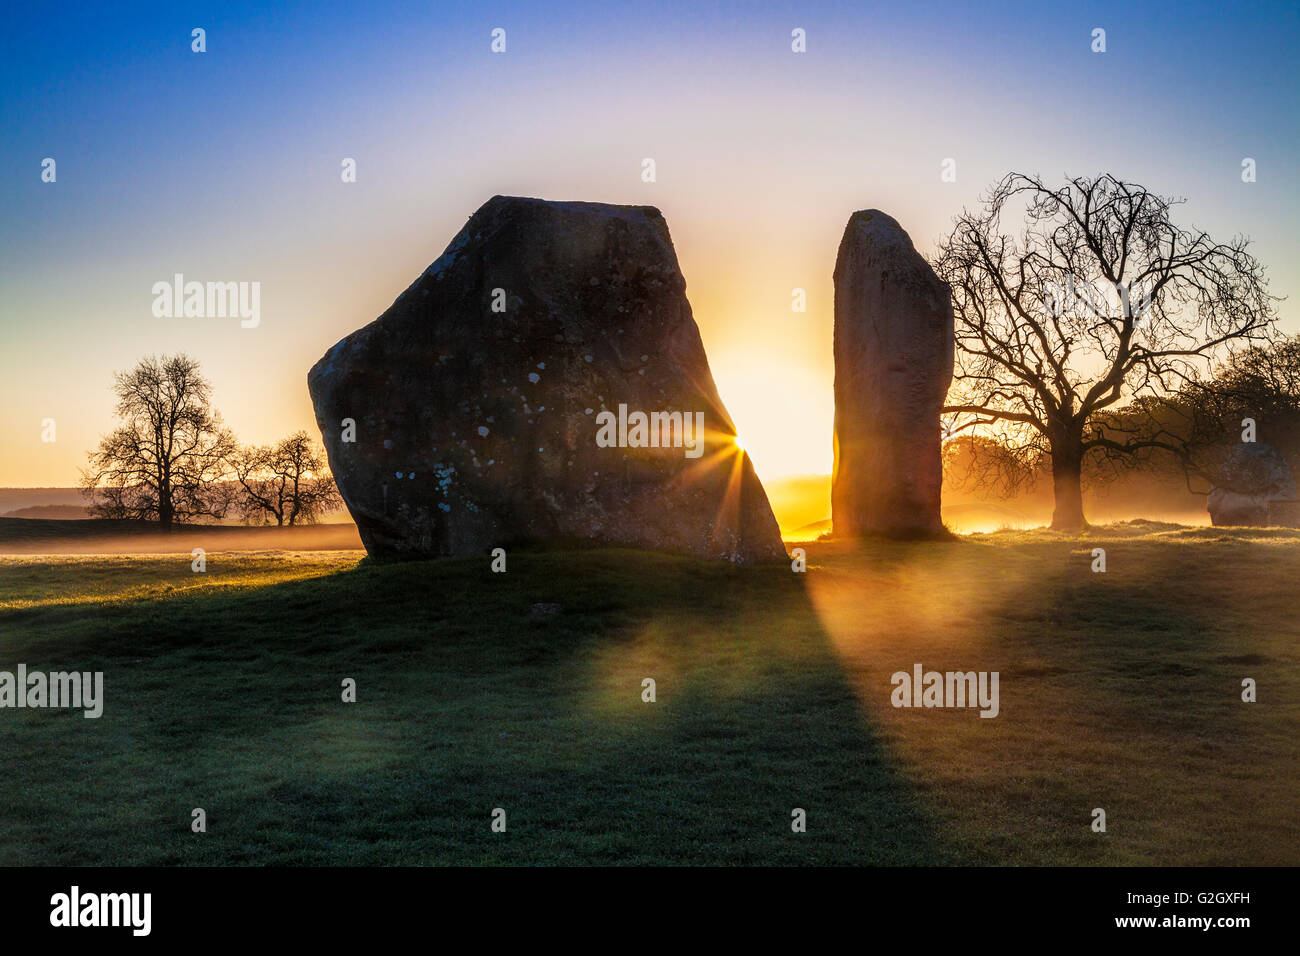 Sarsen stones at sunrise in Avebury, Wiltshire. Stock Photo